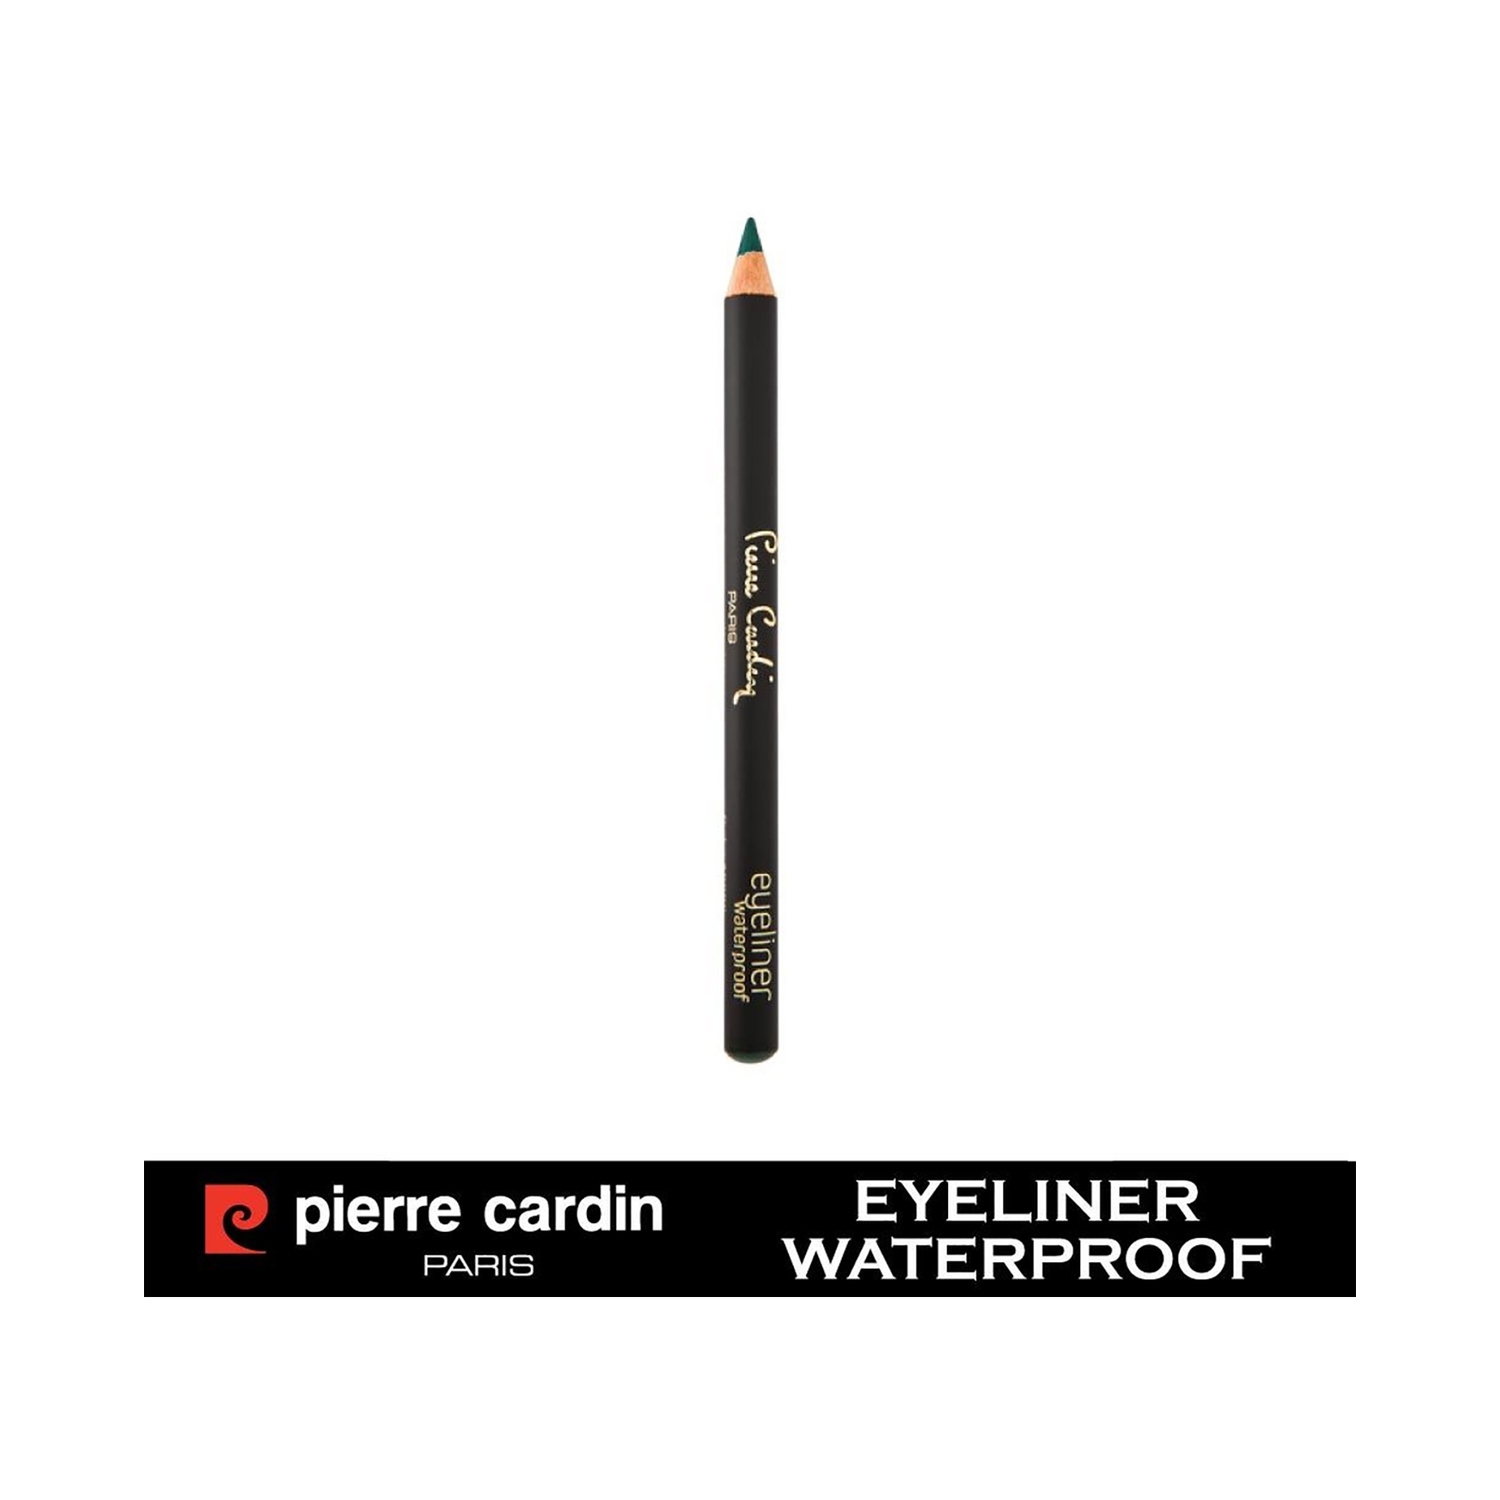 Pierre Cardin Paris | Pierre Cardin Paris Waterproof Eyeliner Pencil - 150 Greensward (0.04g)